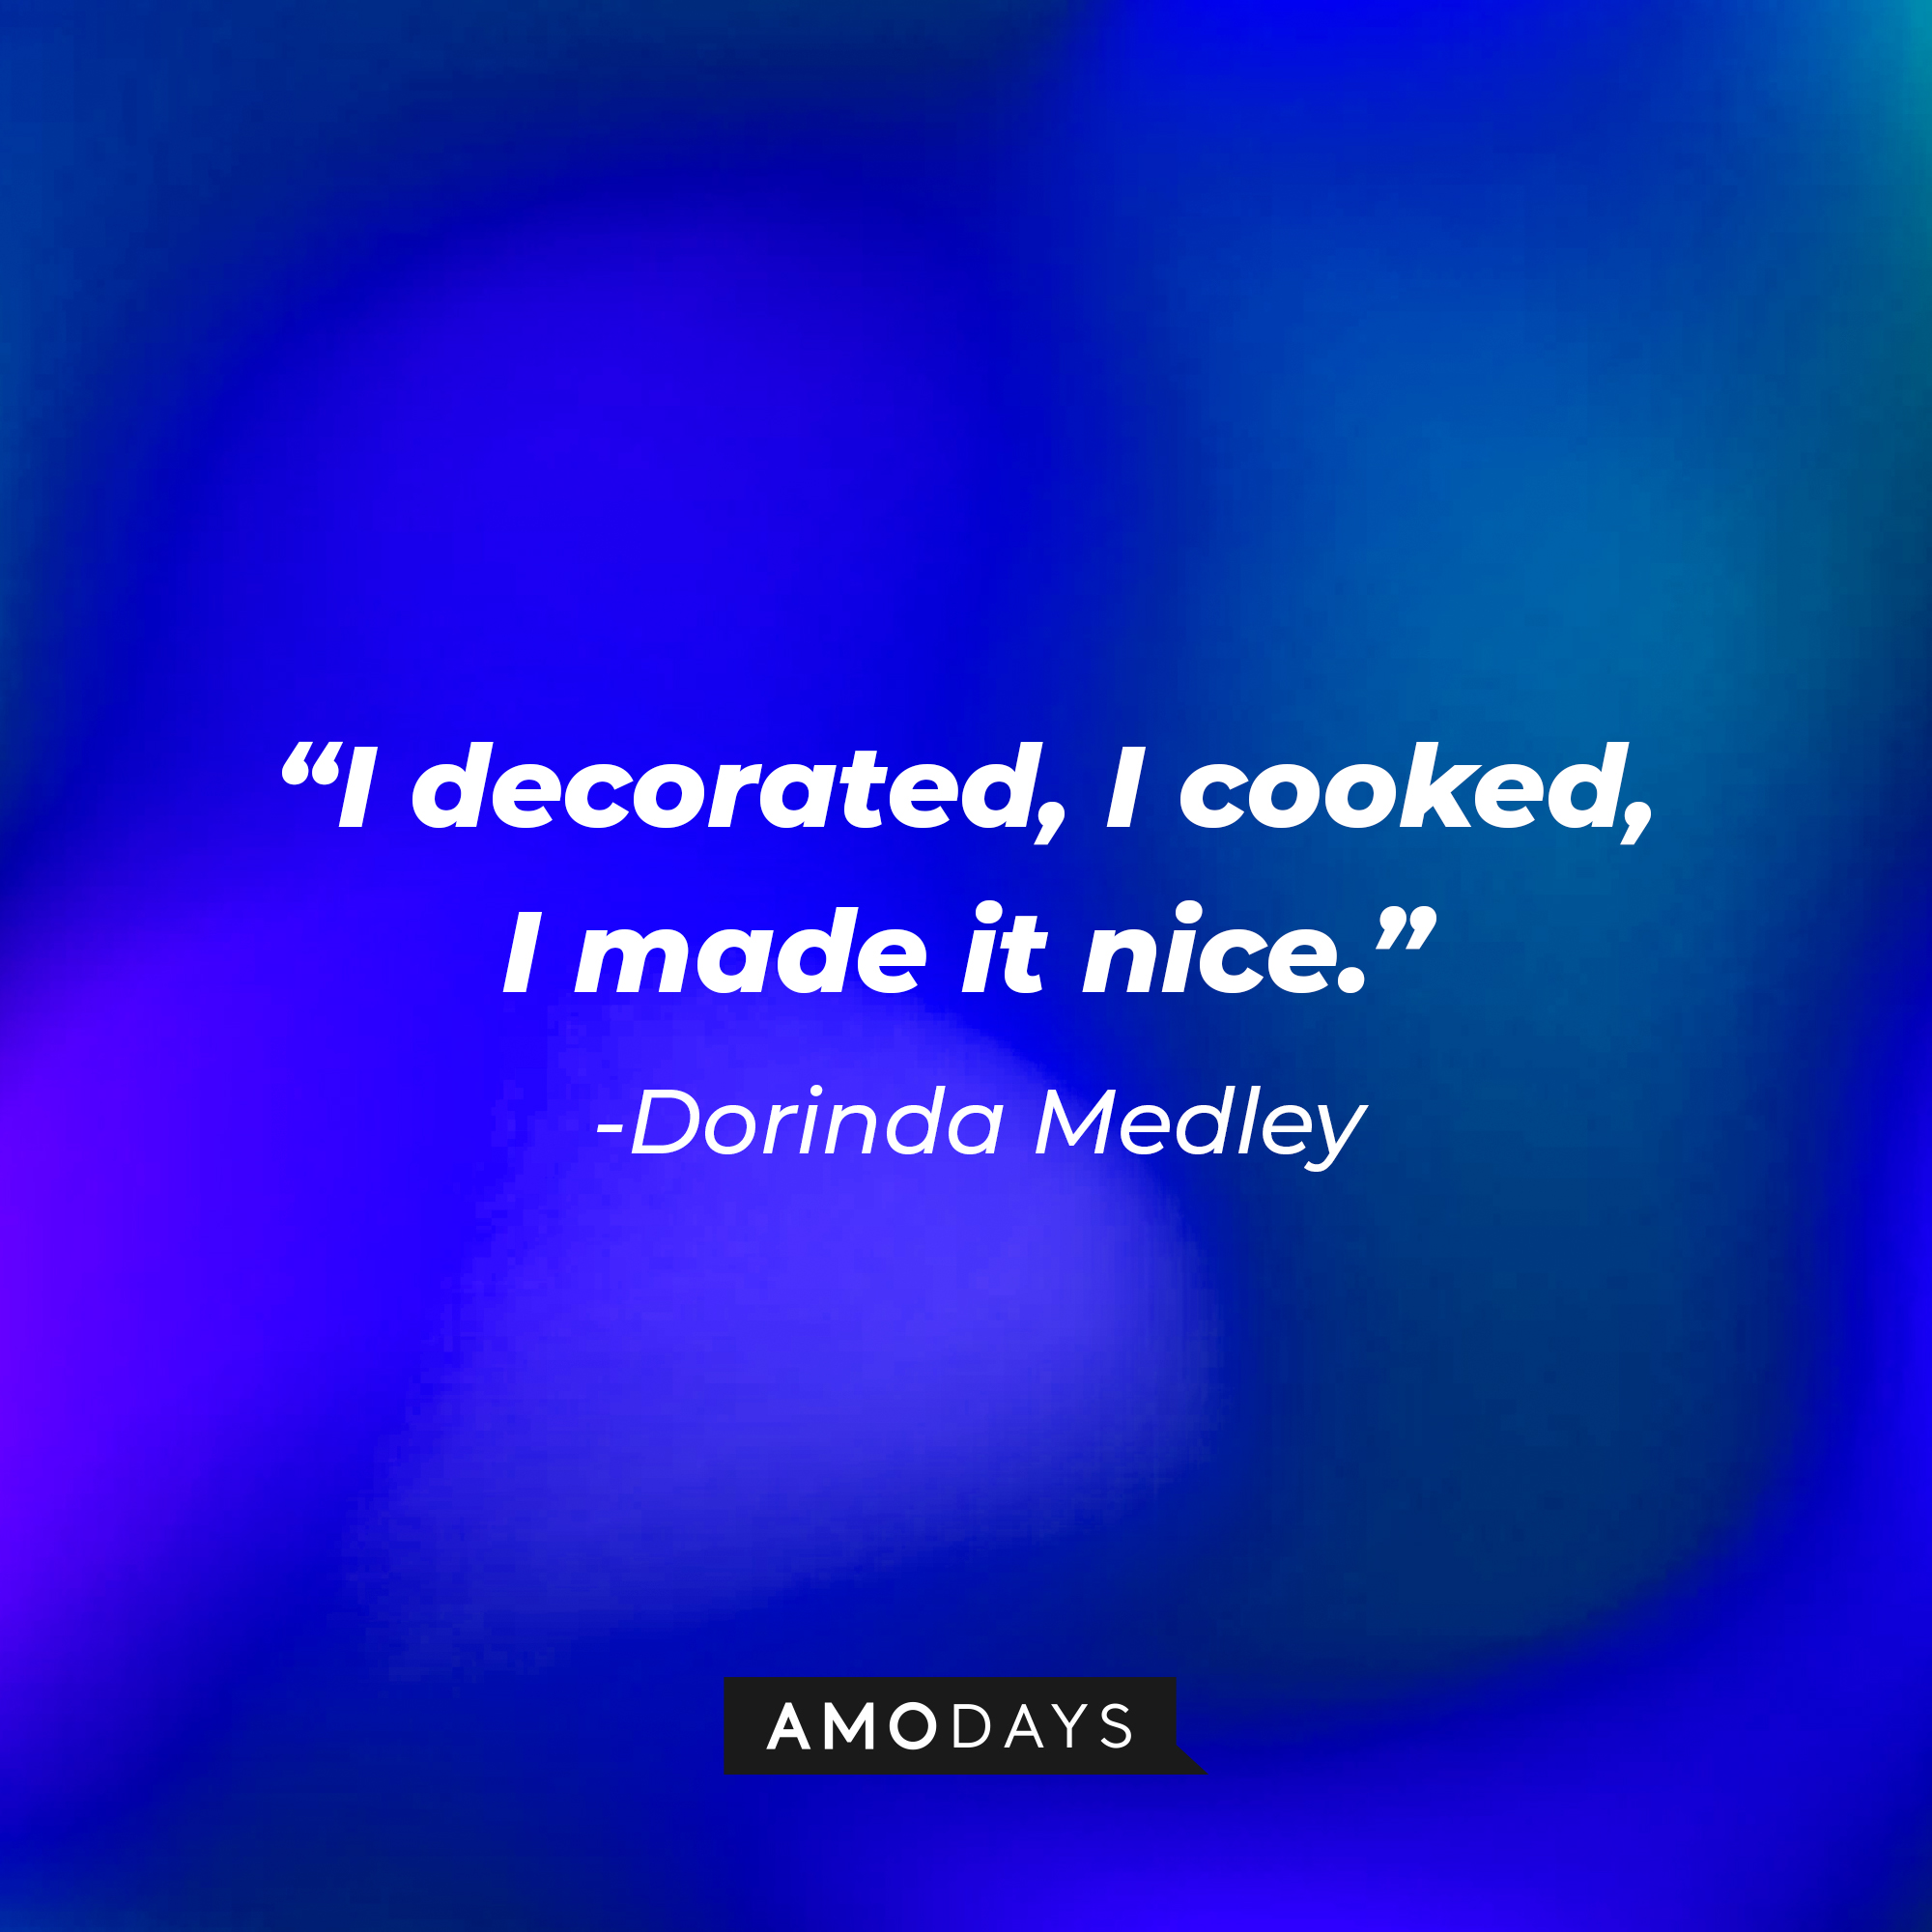 Dorinda Medley’s quote: "I decorated, I cooked, I made it nice." | Source: AmoDays